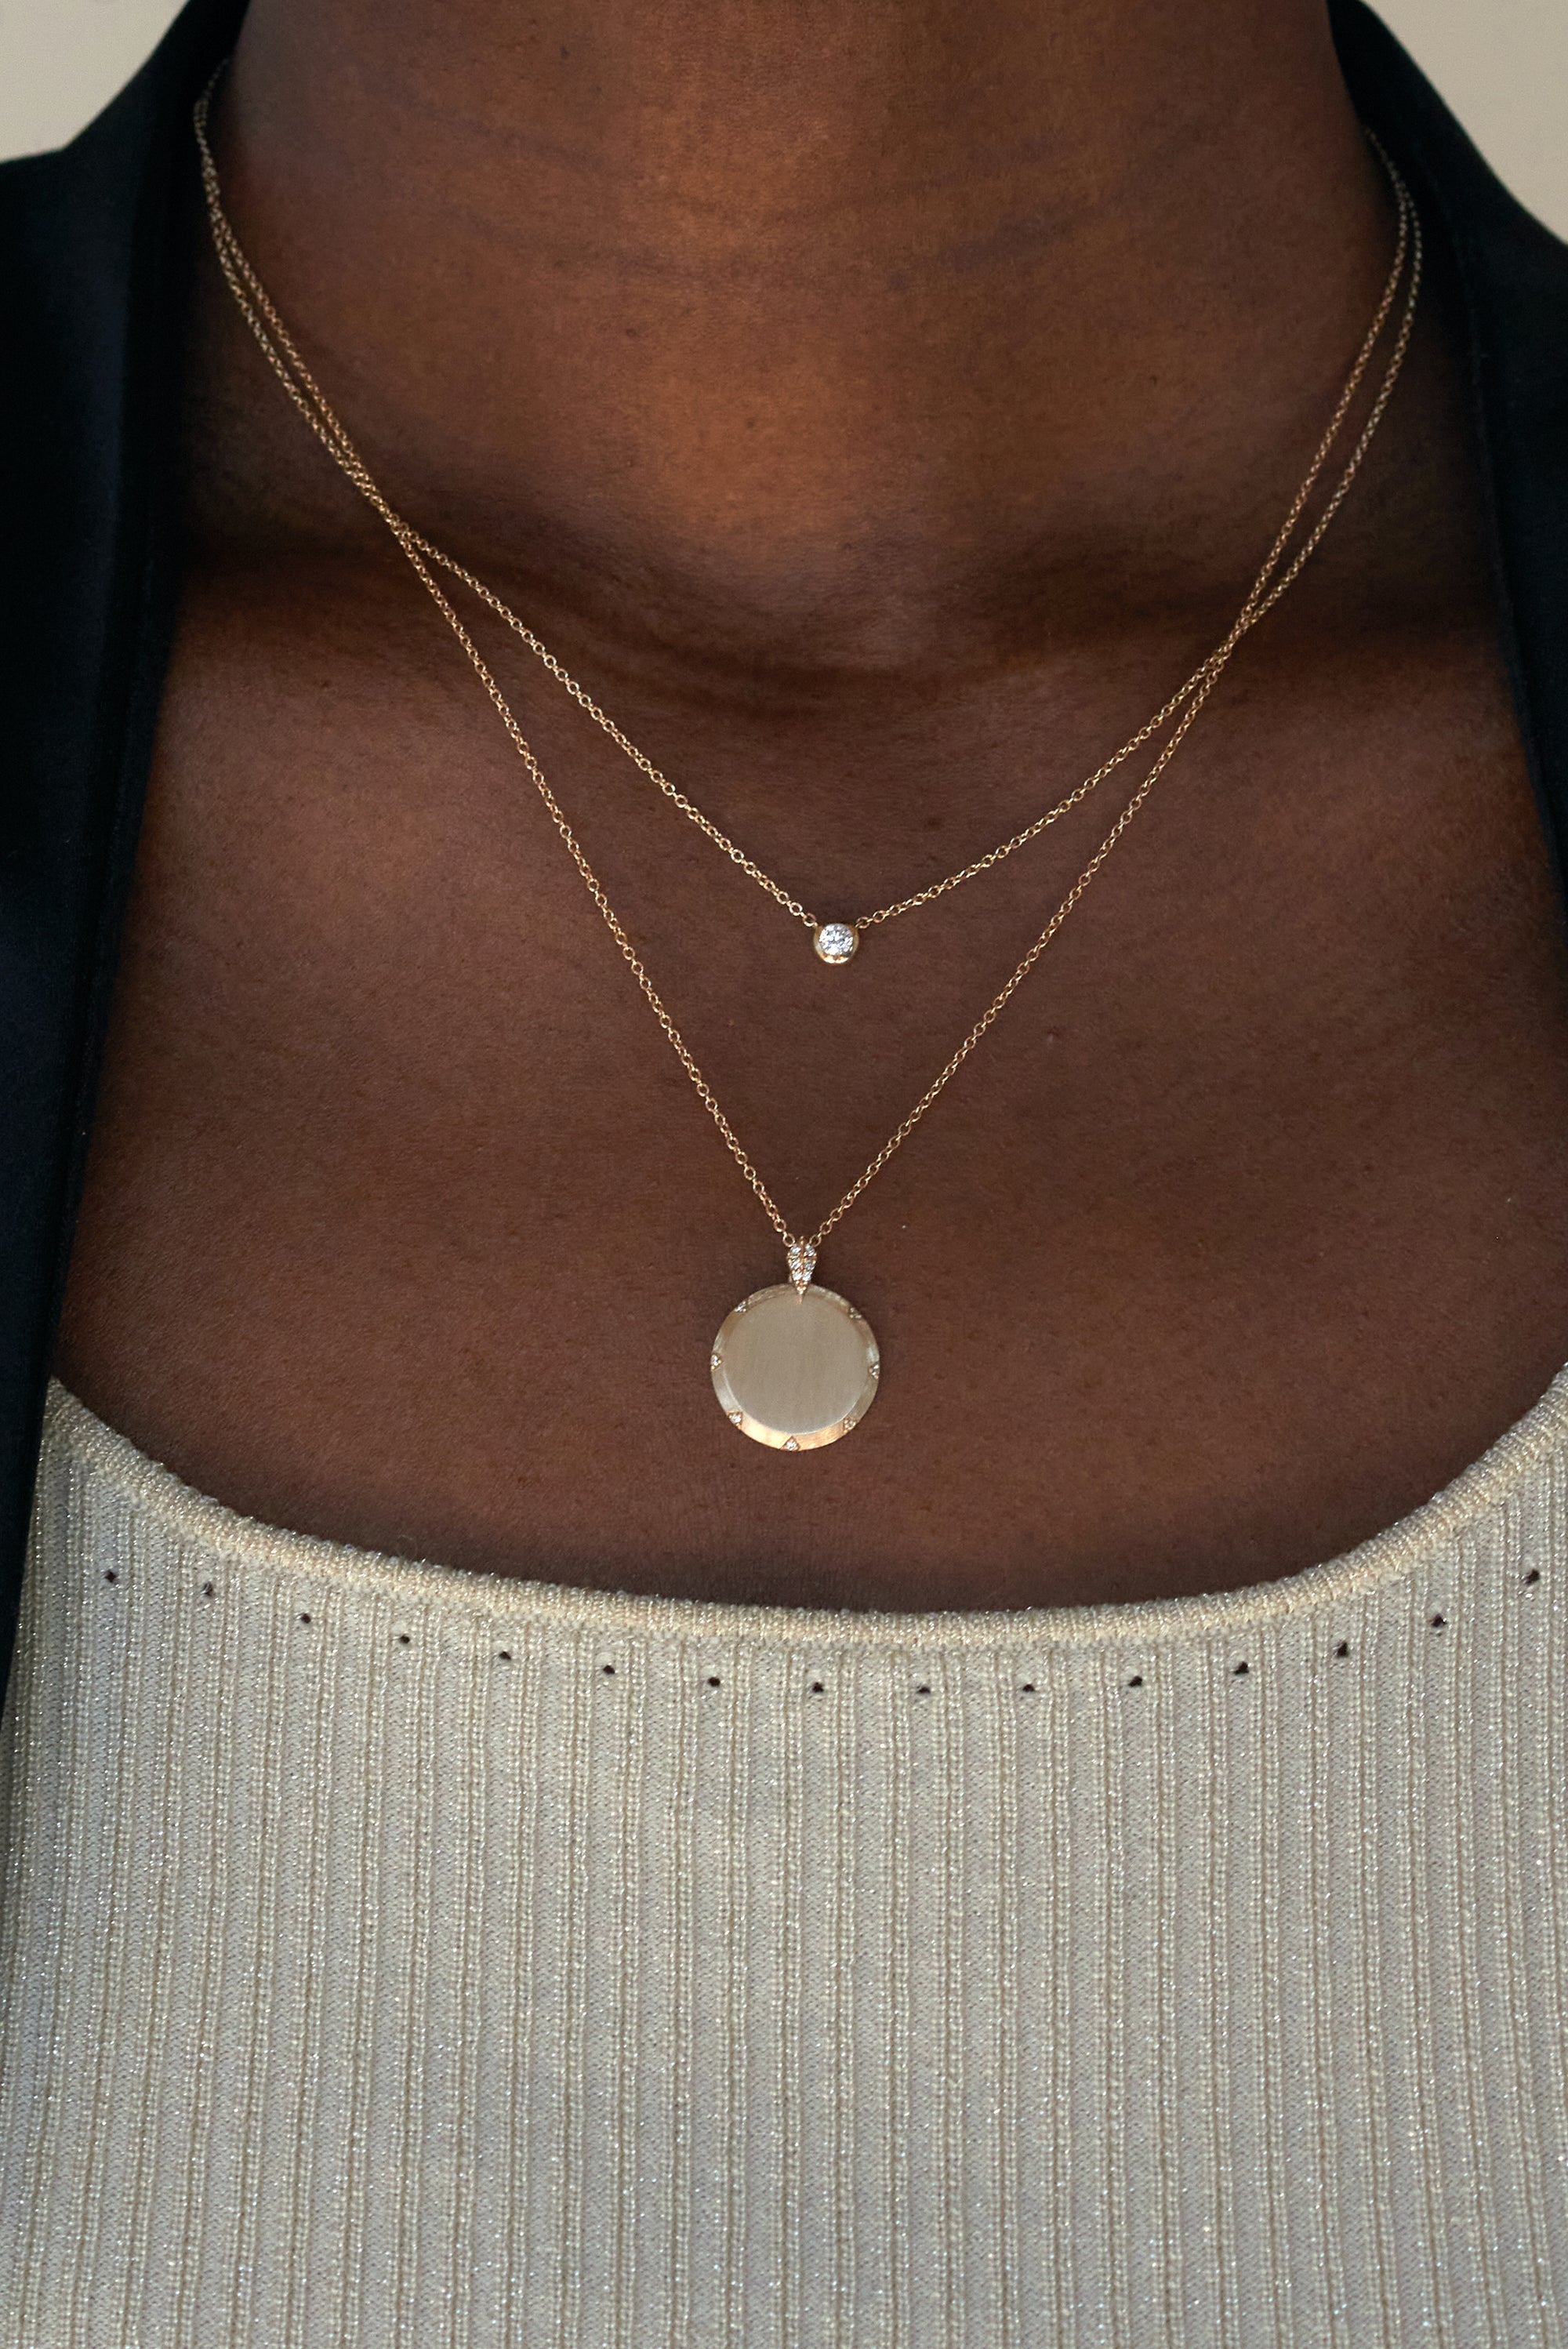 Vanderbilt Diamond Gold Necklace on Figure